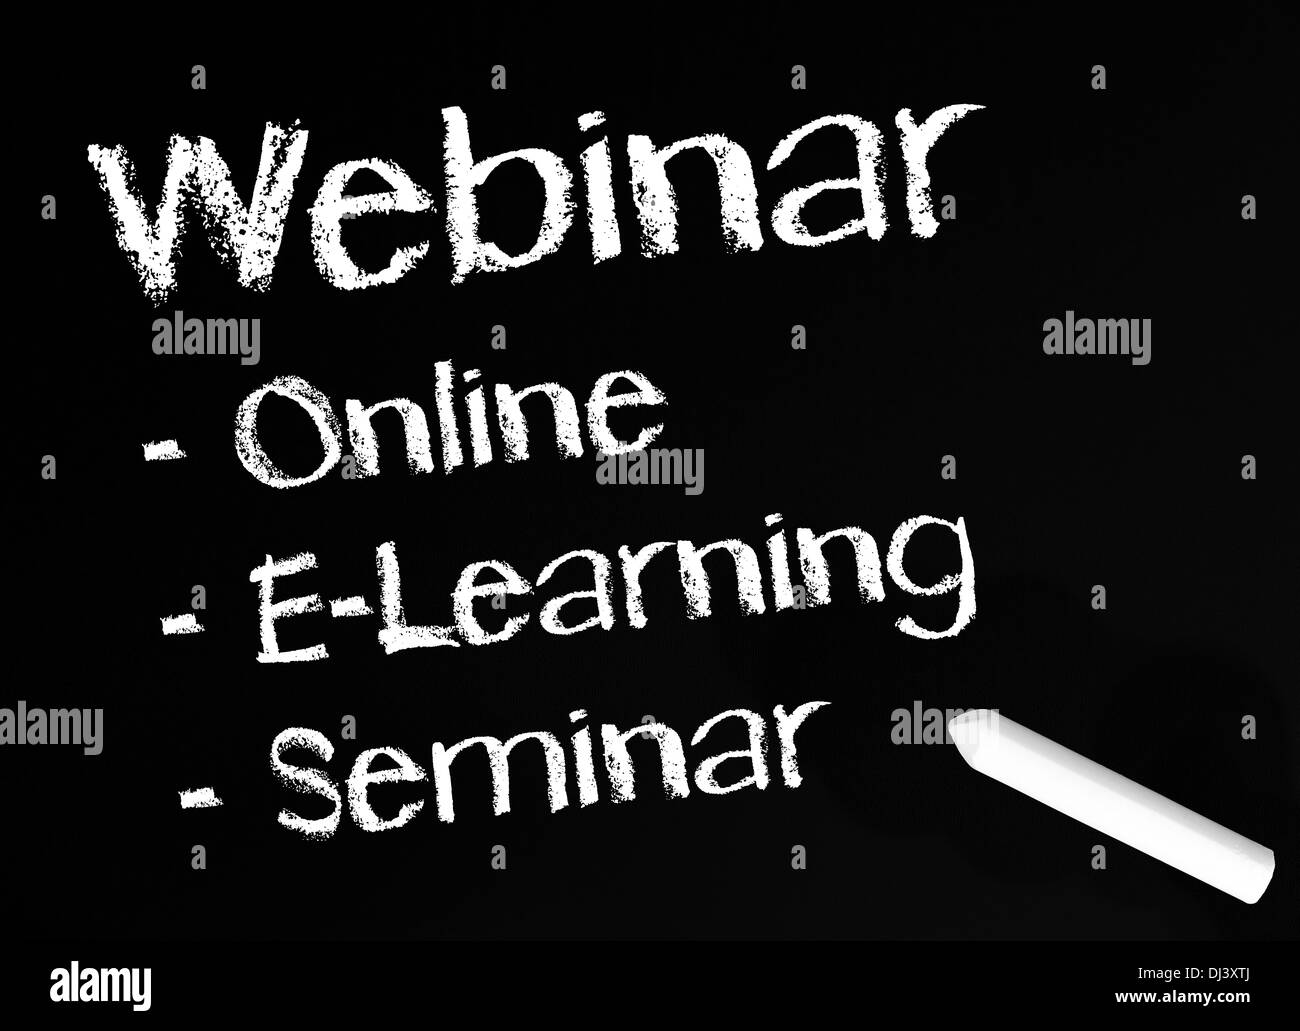 Online E-Learning Seminar Stock Photo